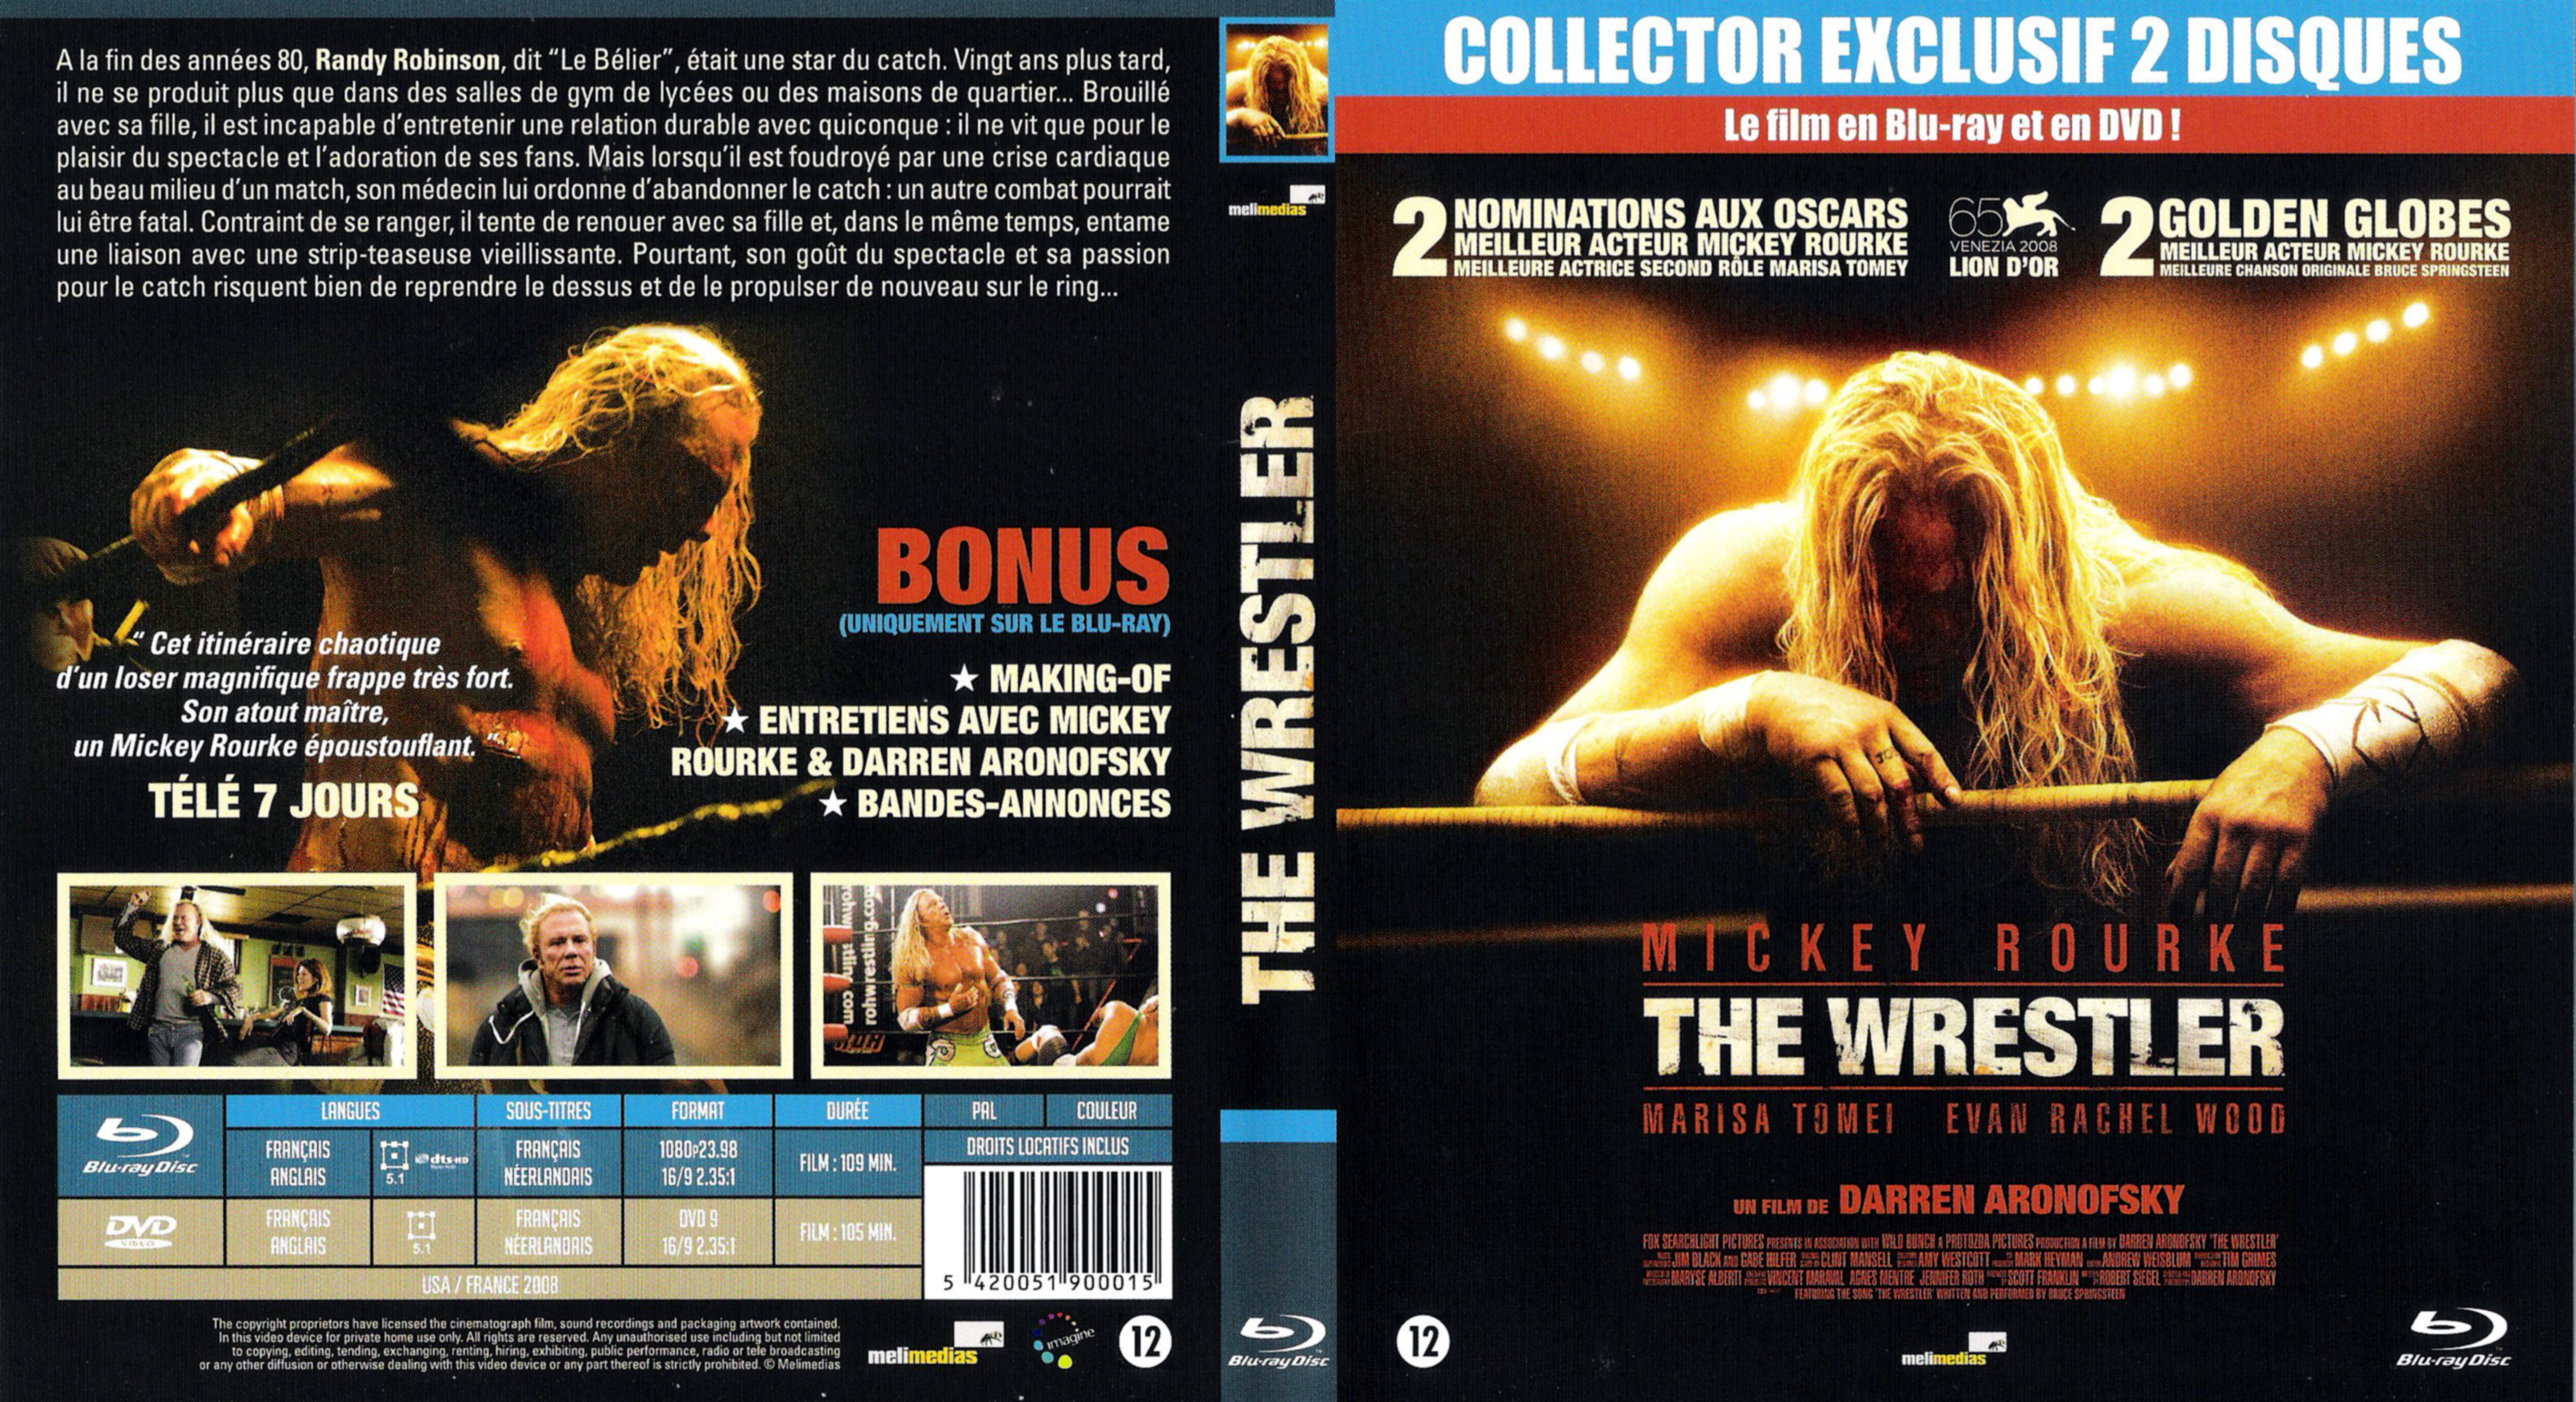 Jaquette DVD The wrestler (BLU-RAY) v2